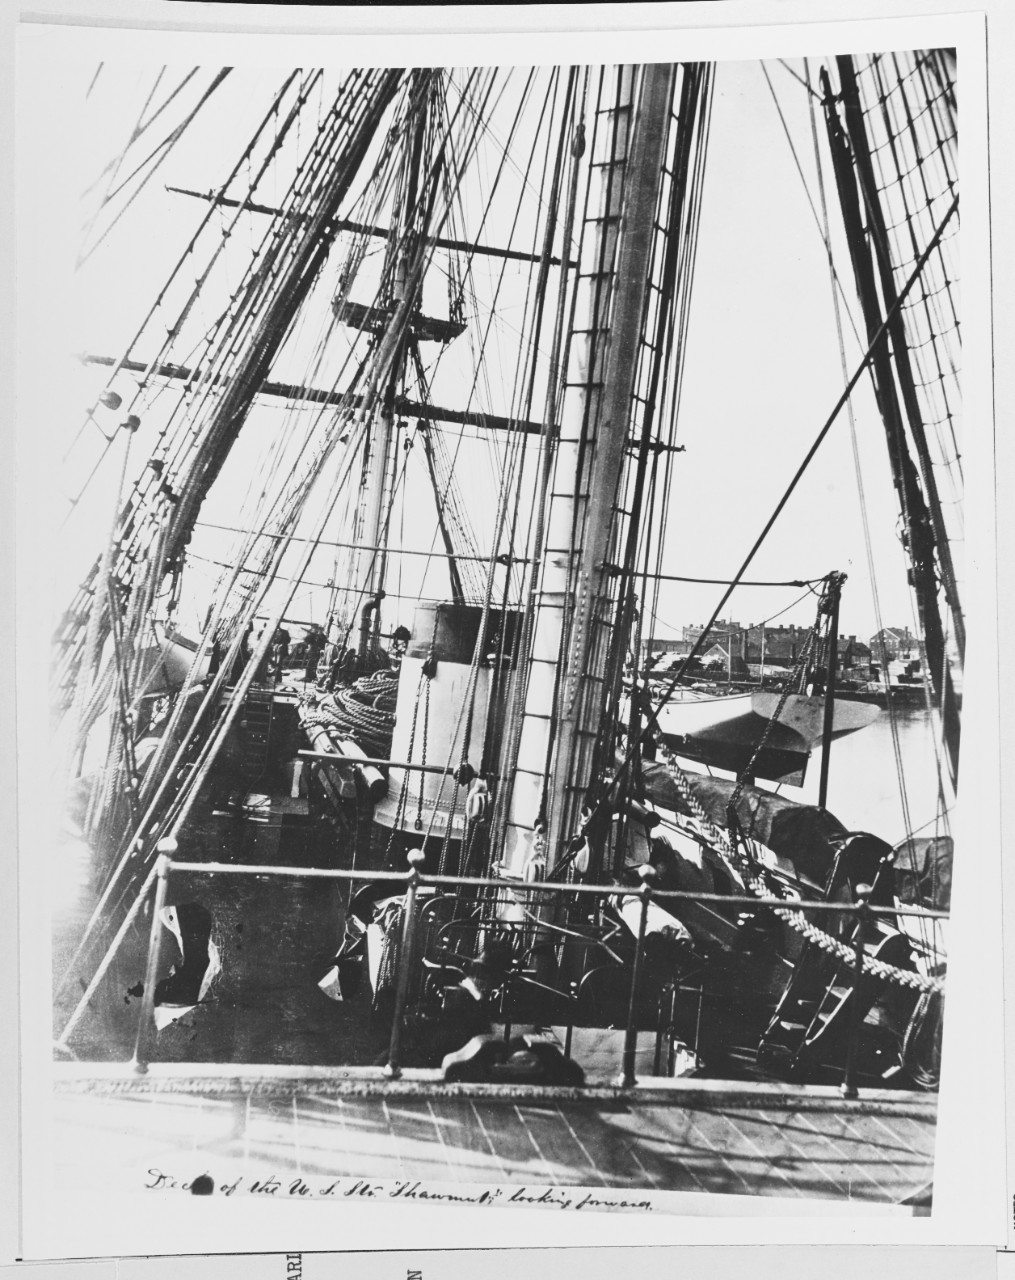 NH 58772 USS SHAWMUT (1864-1883)